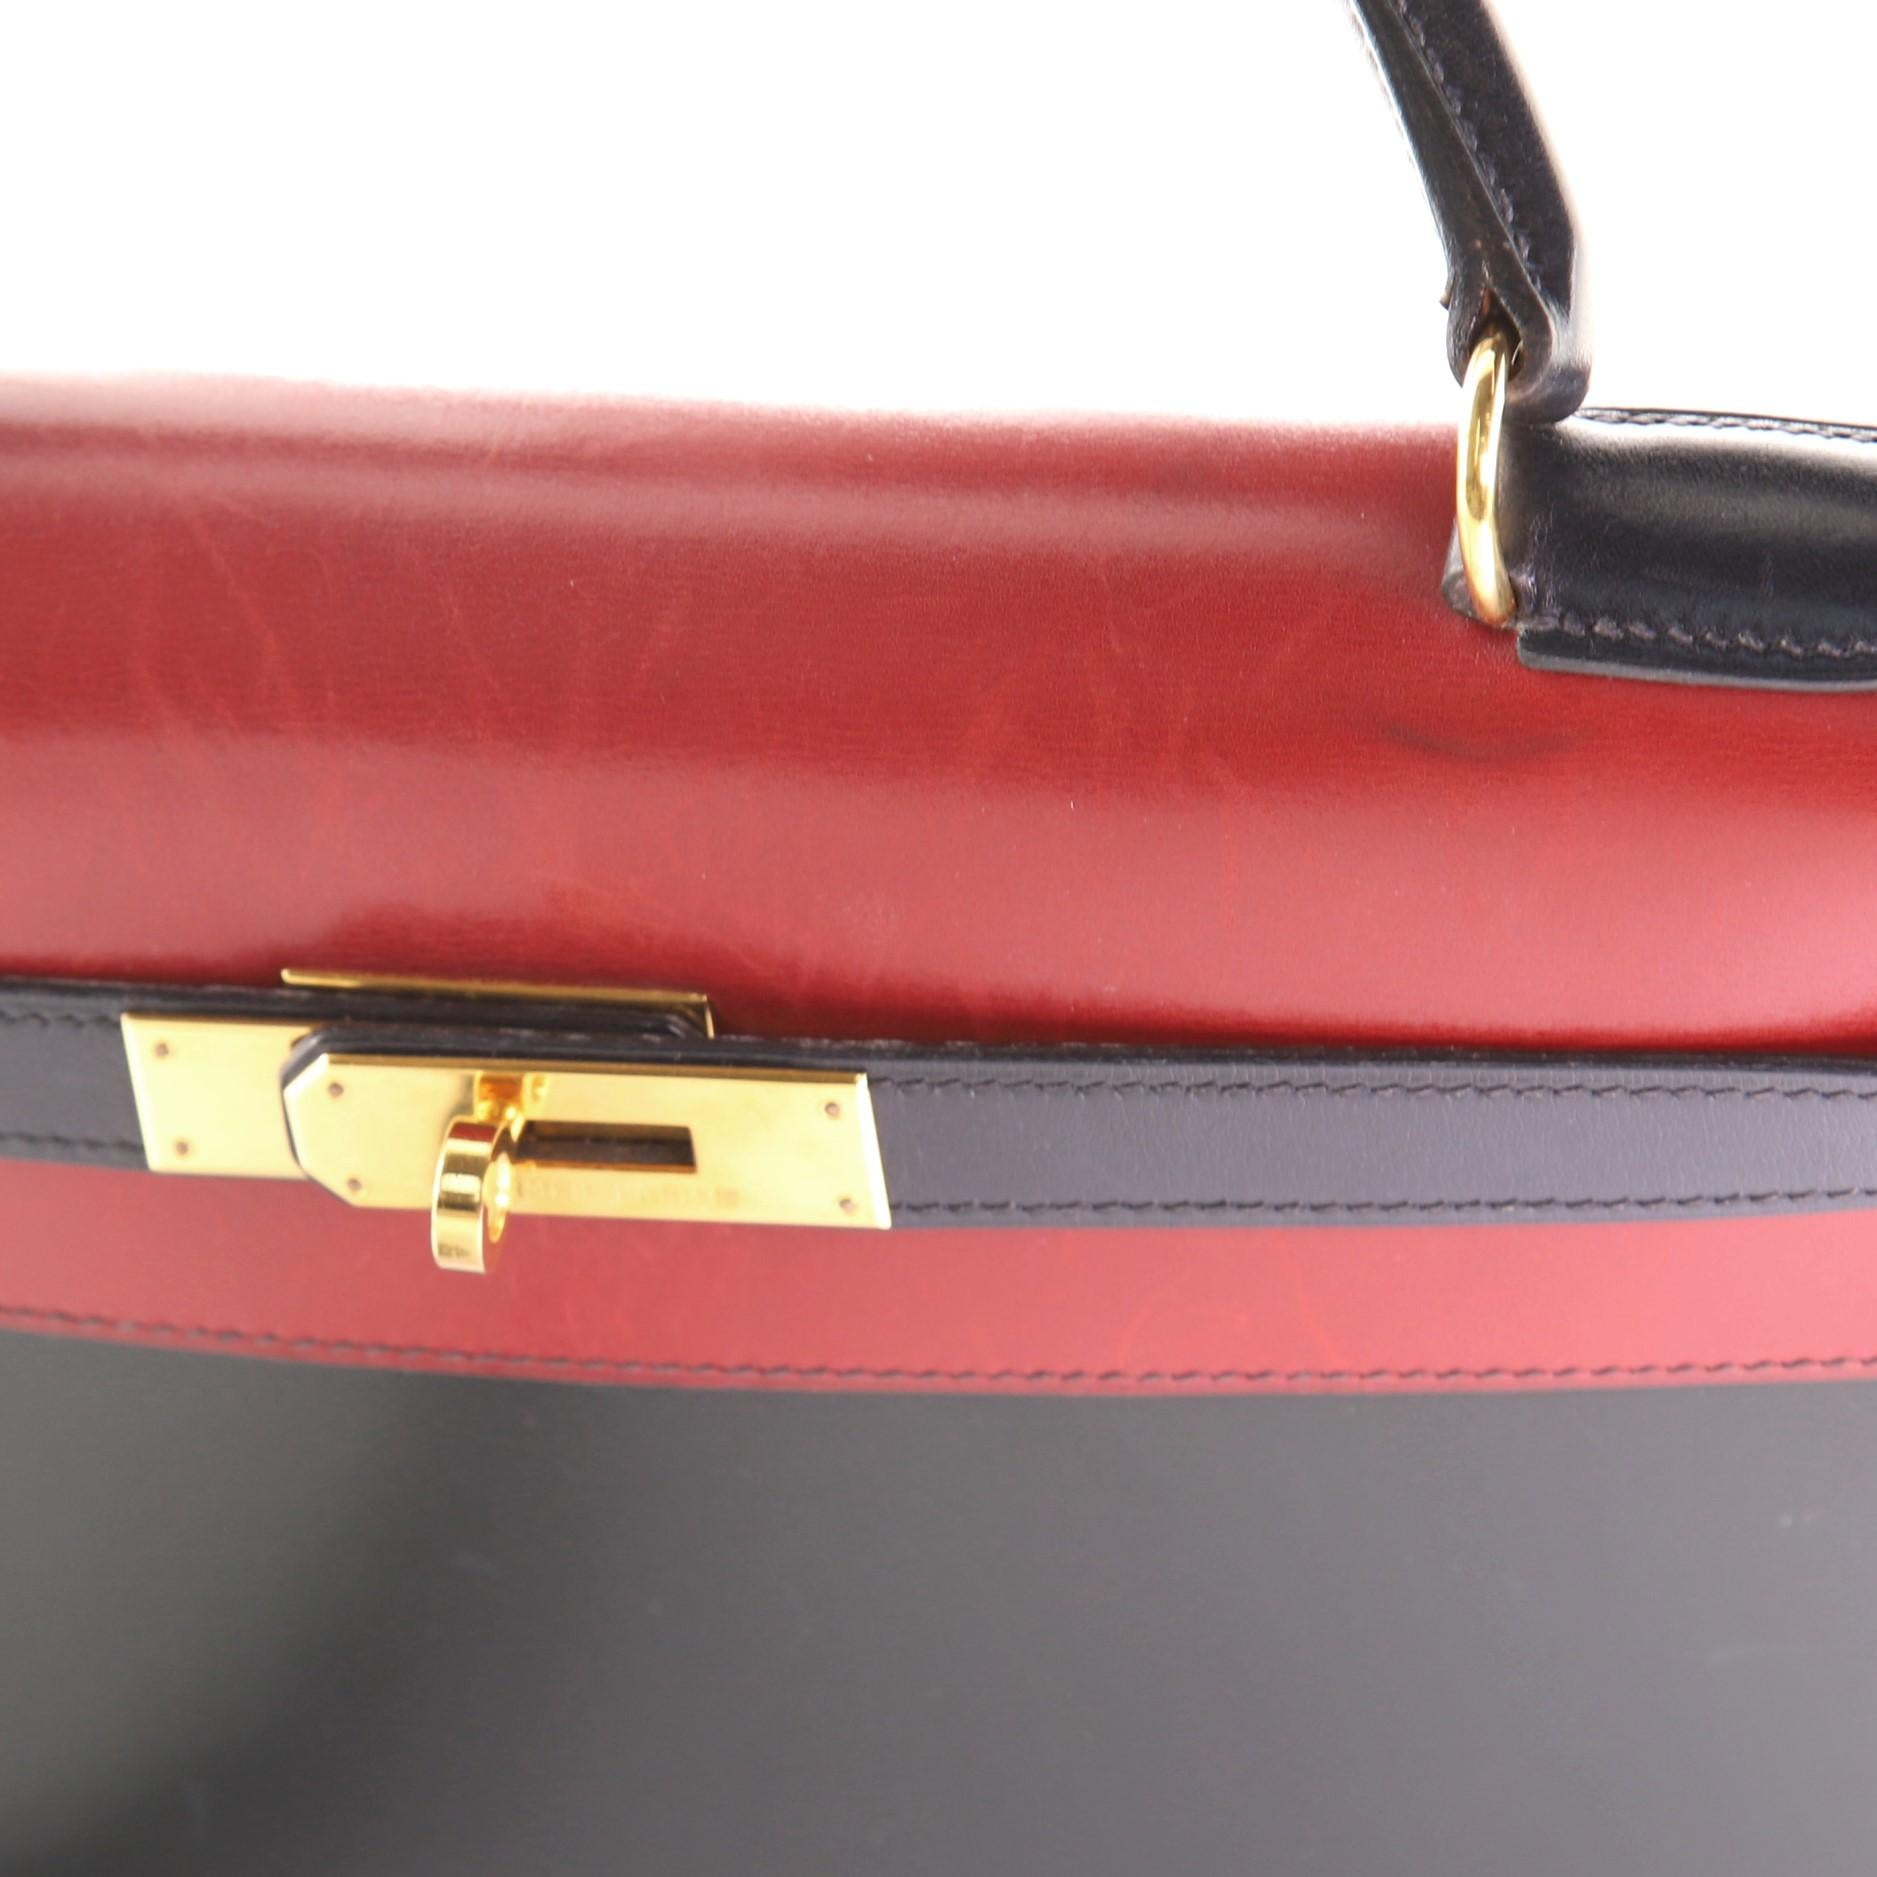 Hermes Kelly Handbag Tricolor Box Calf with Gold Hardware 32 3